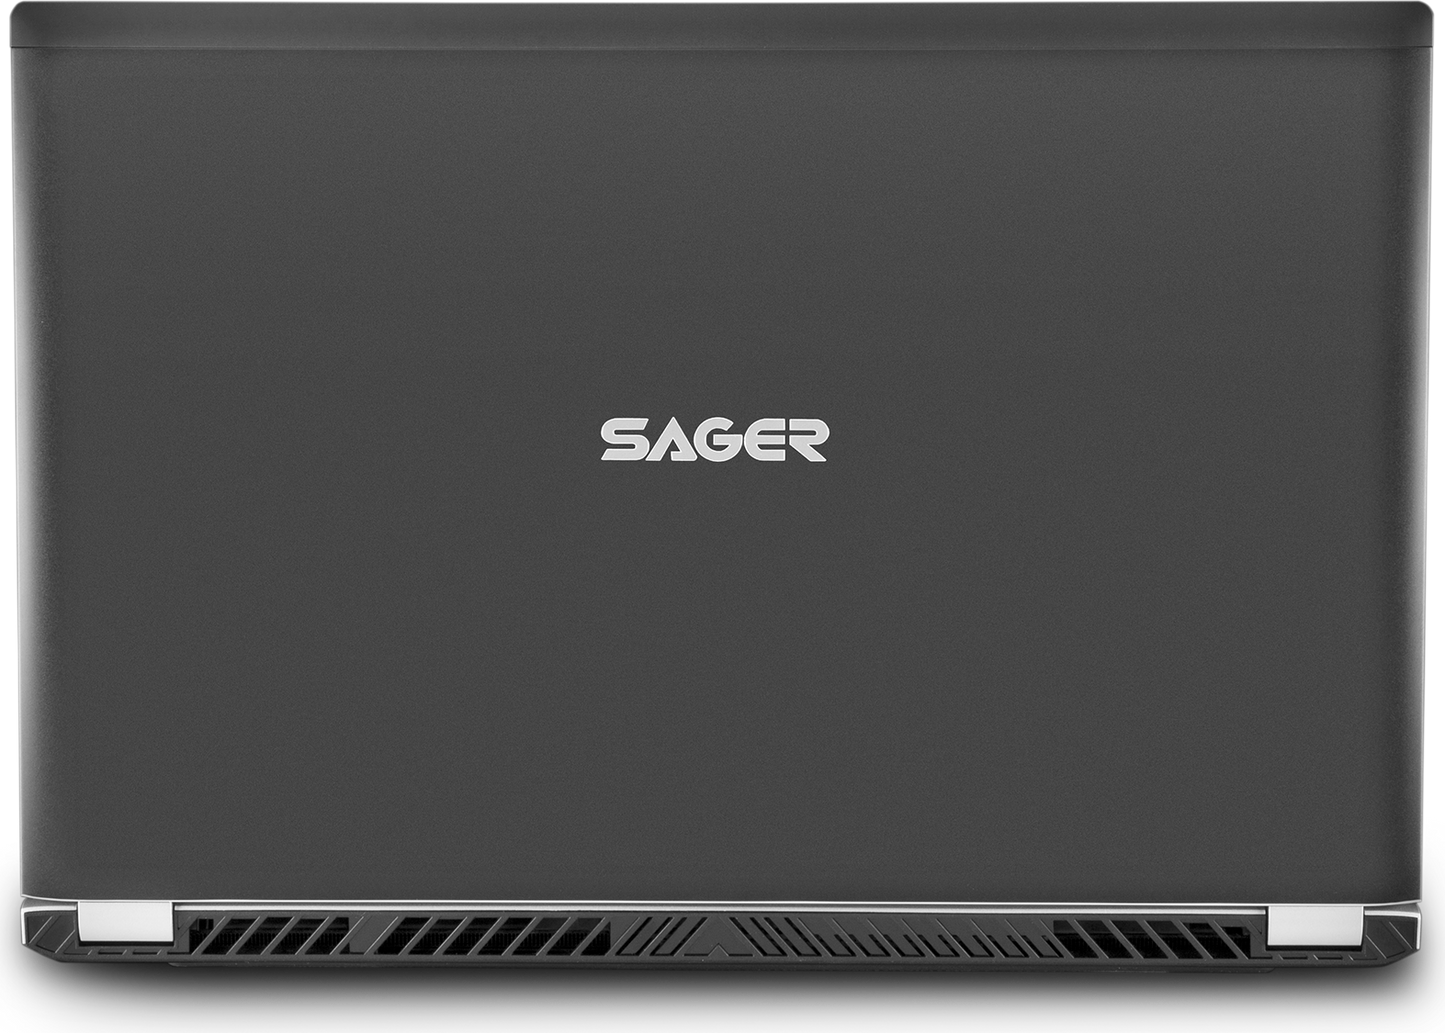 Sager NP2950 (Clevo P955ET1)